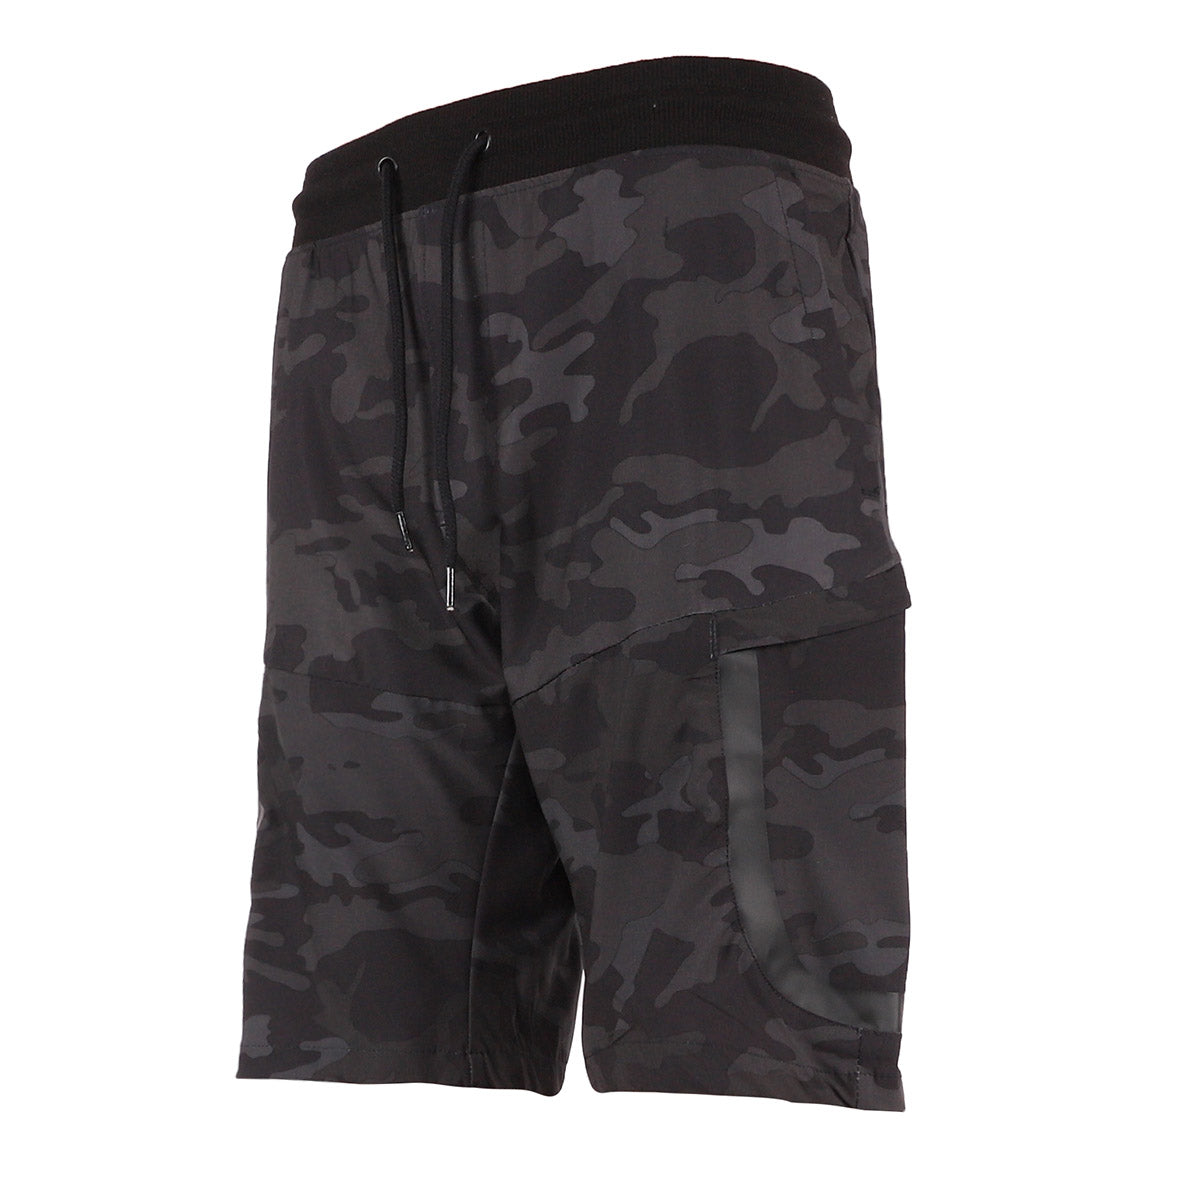 Image of Under Armour Men's Camo 2 Pocket Shorts